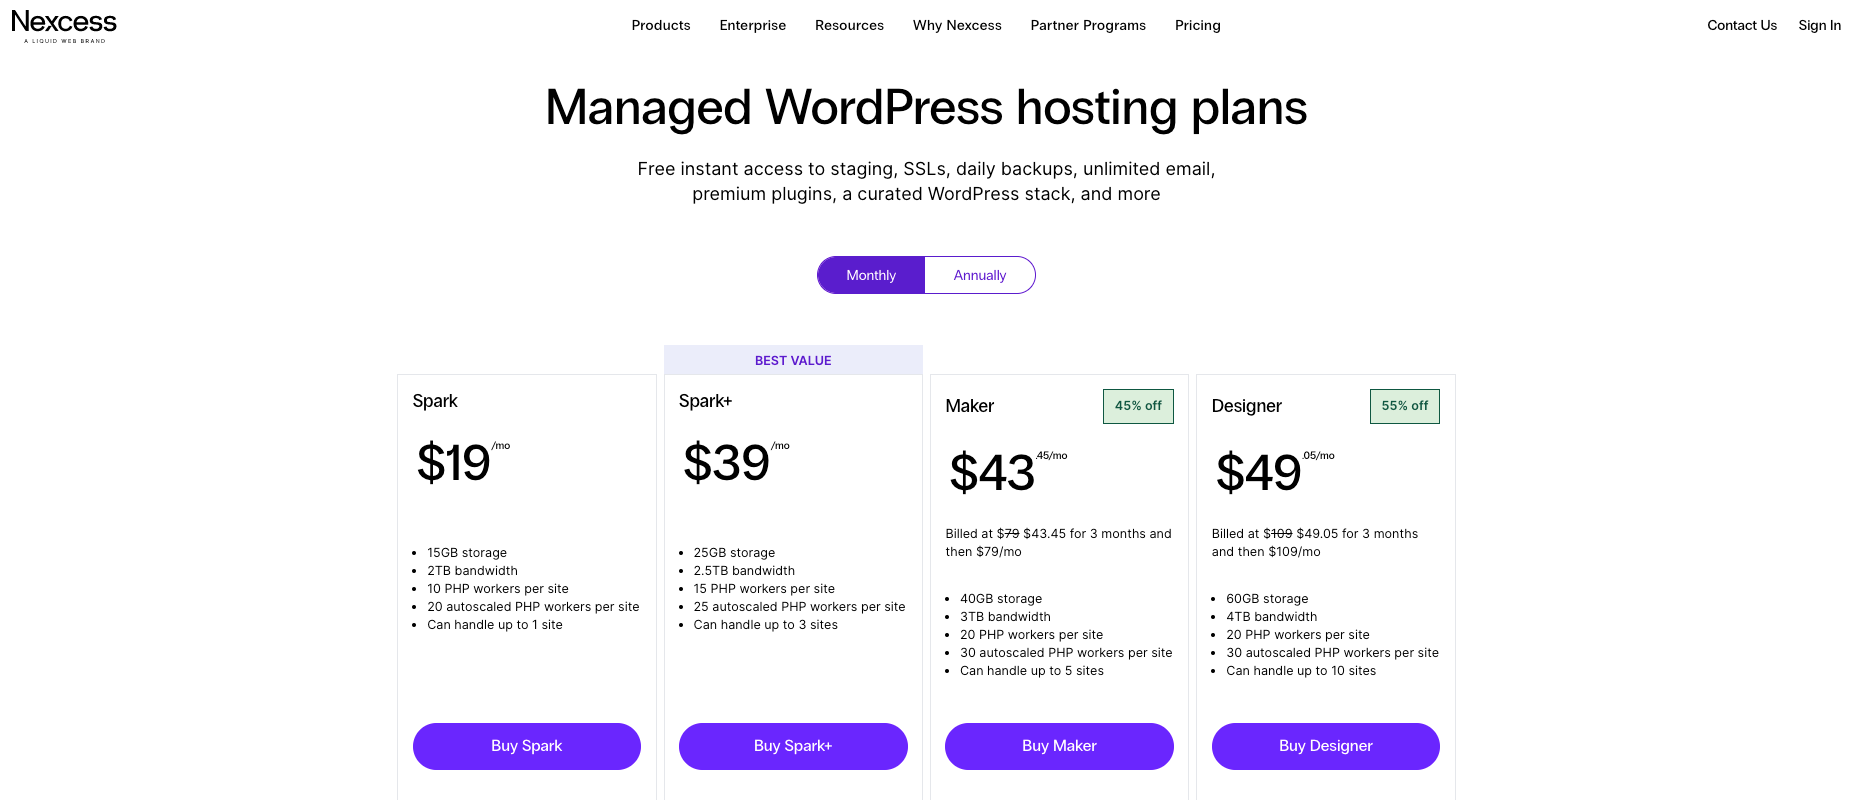 Managed WordPress hosting plans from Nexcess